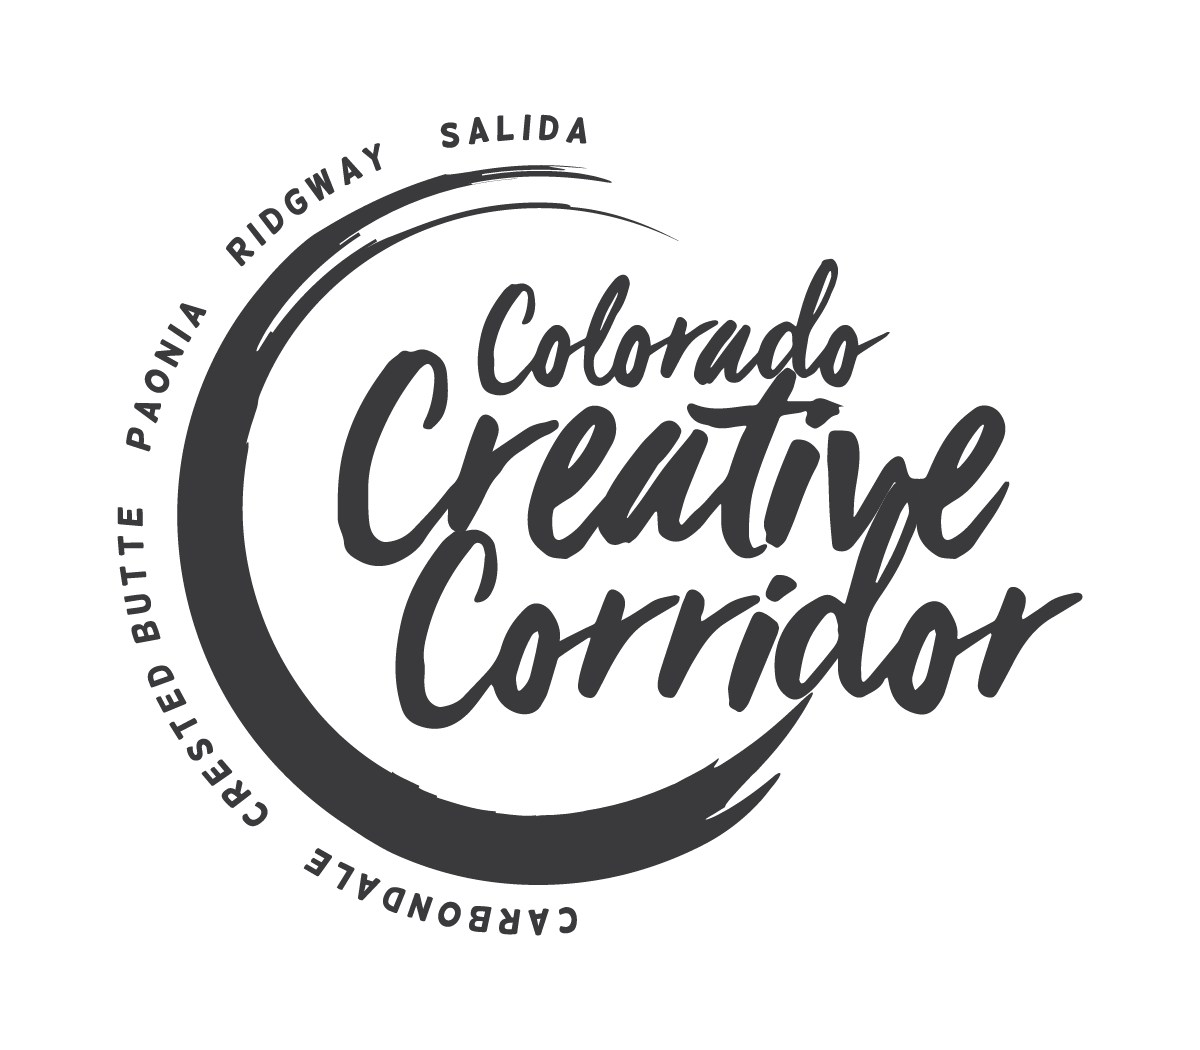 Colorado Creative Corridor